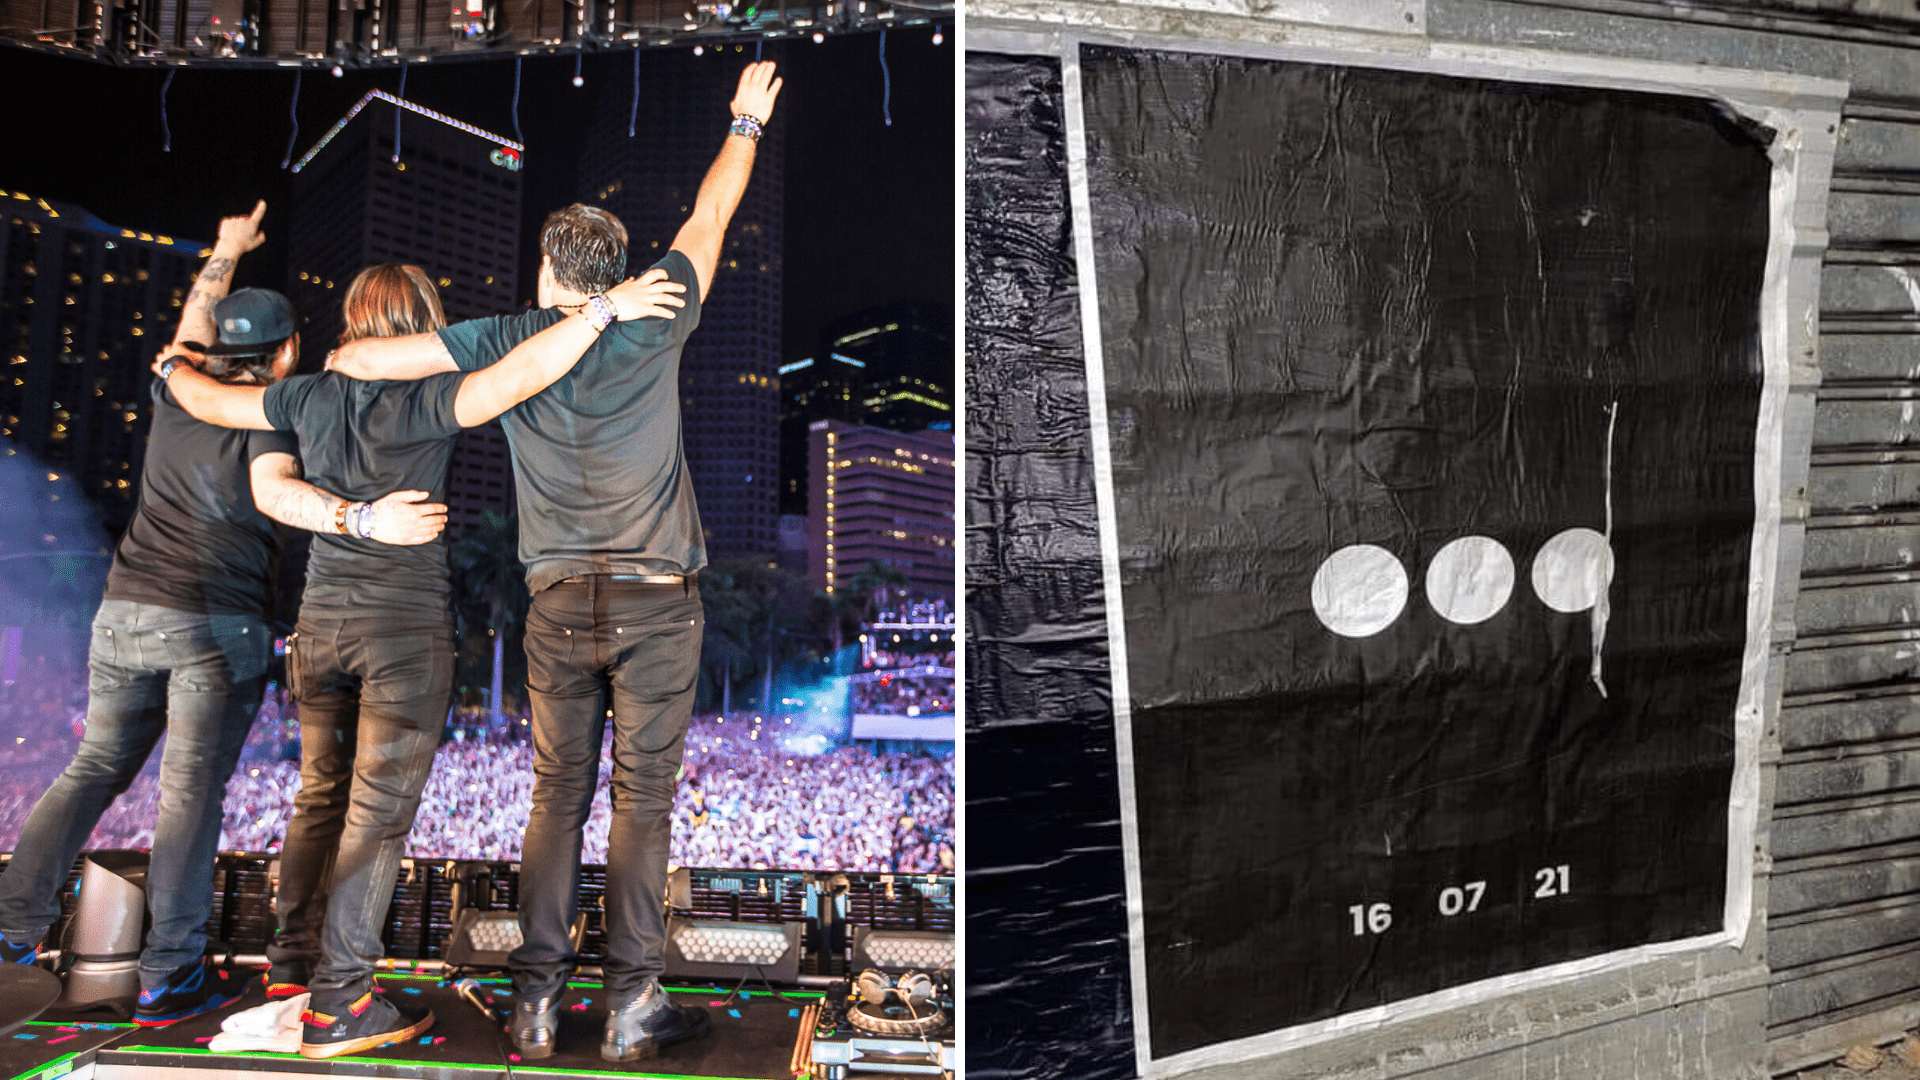 Swedish House Mafia rumors begin as poster in Australia surfaces